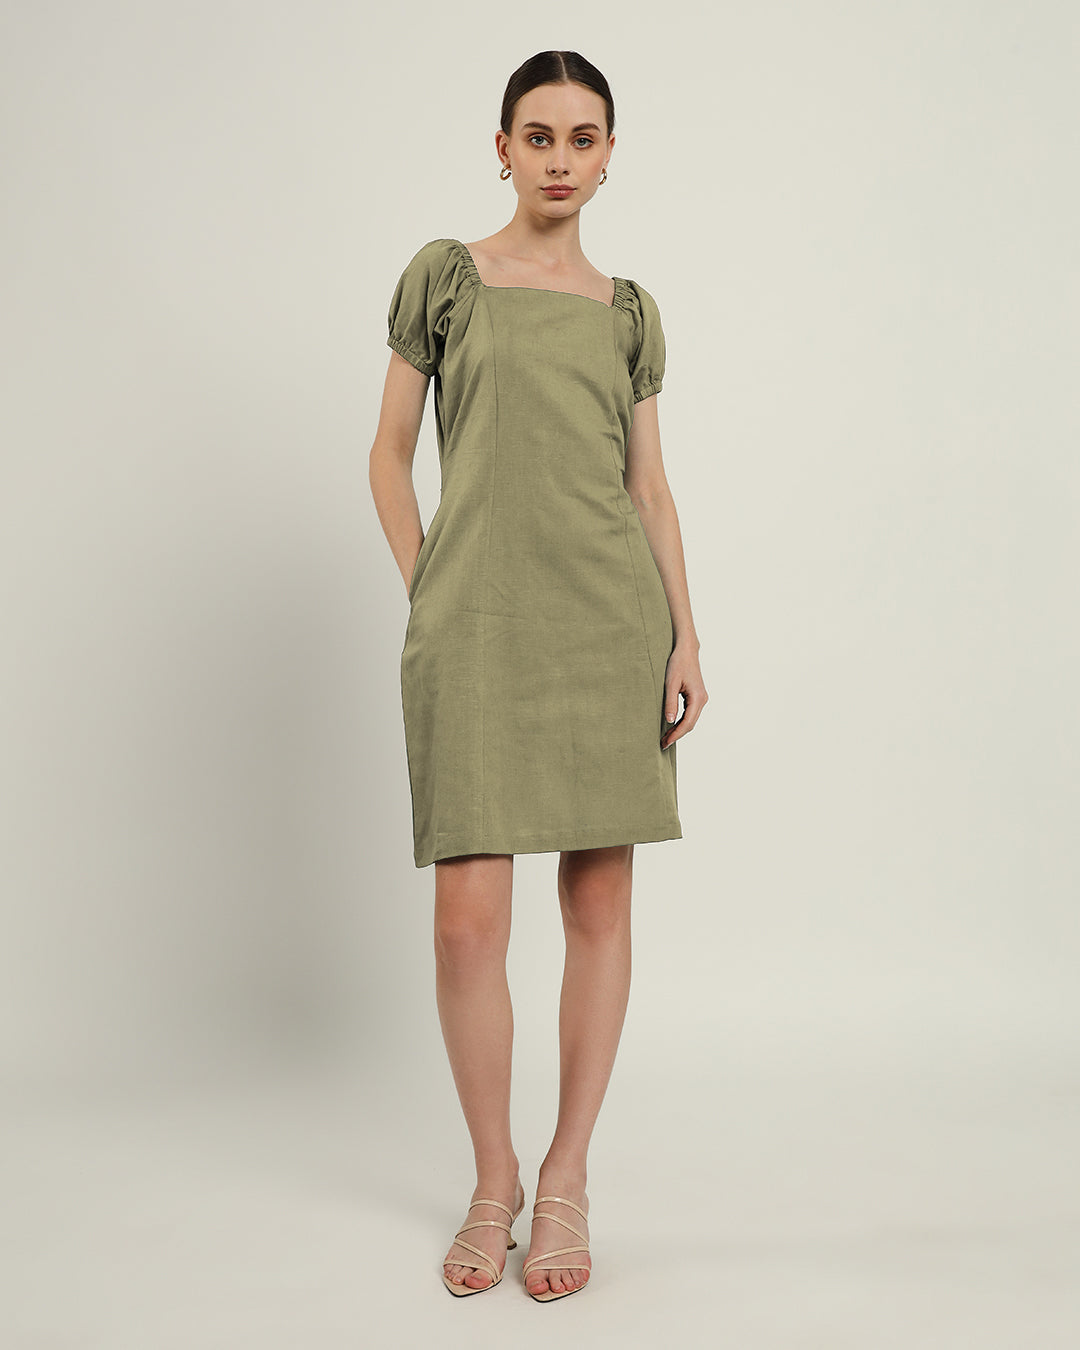 The Arar Daisy Olive Linen Dress